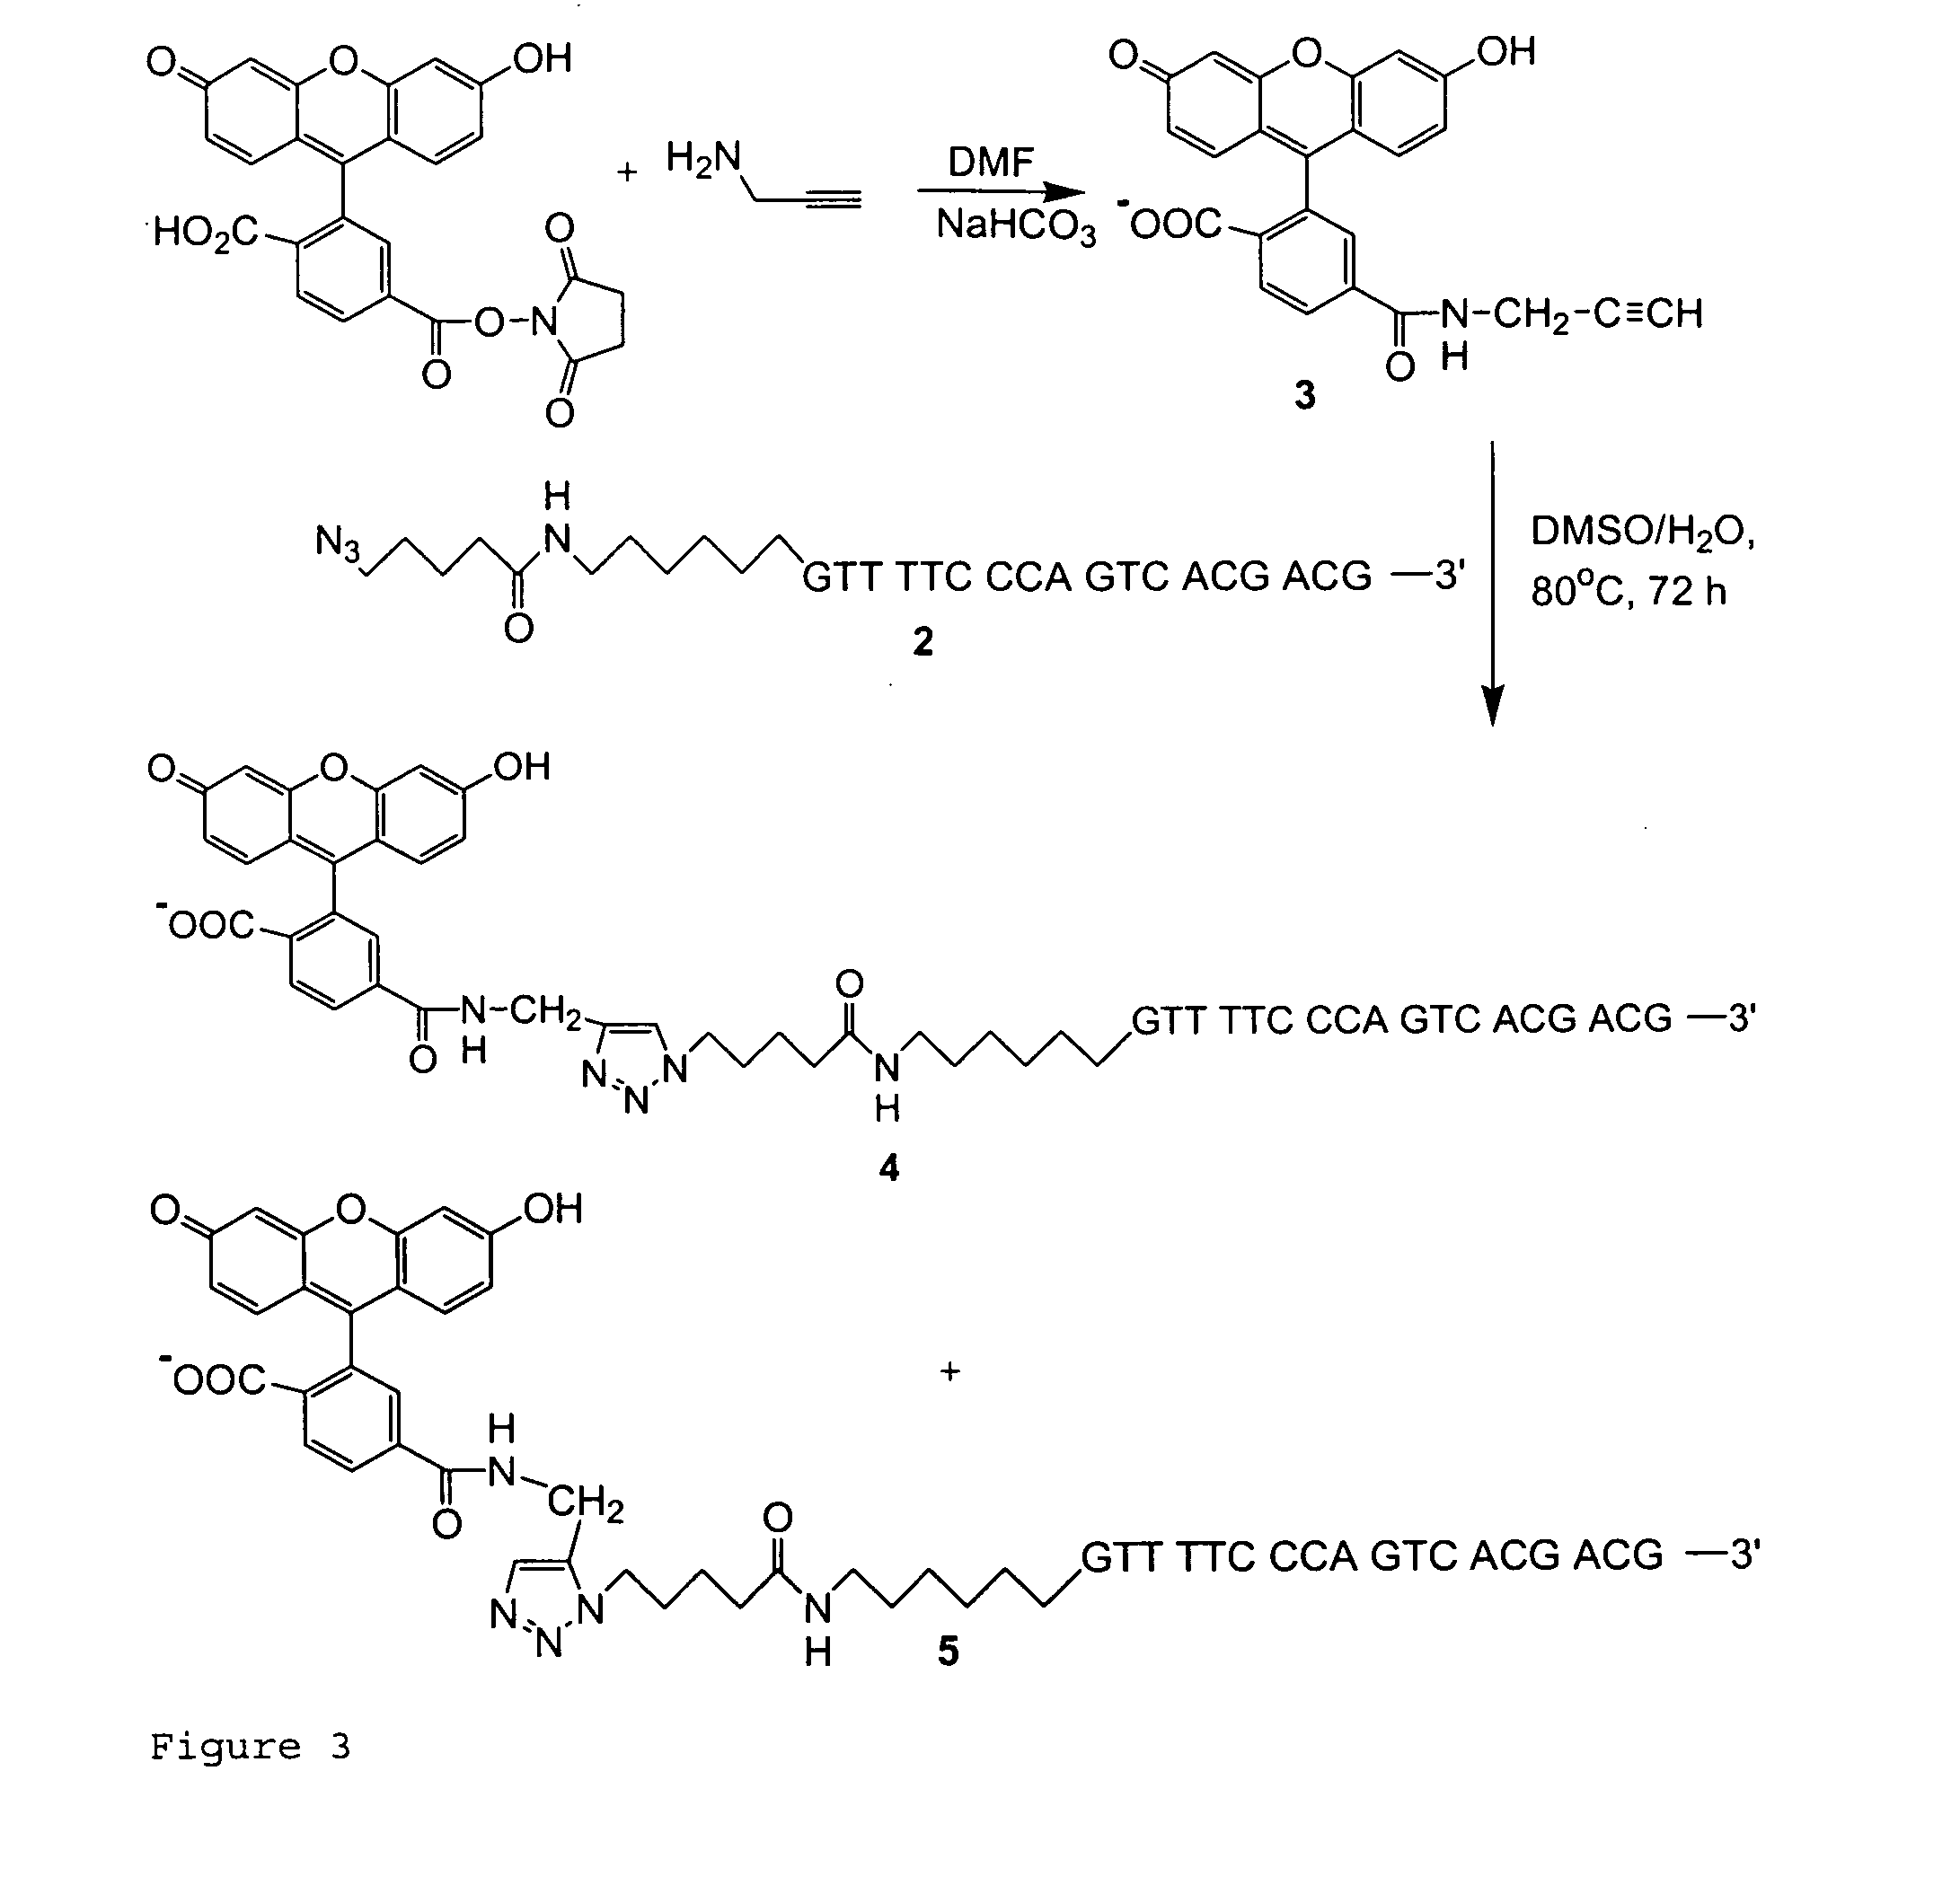 Biomolecular coupling methods using 1,3-dipolar cycloaddition chemistry